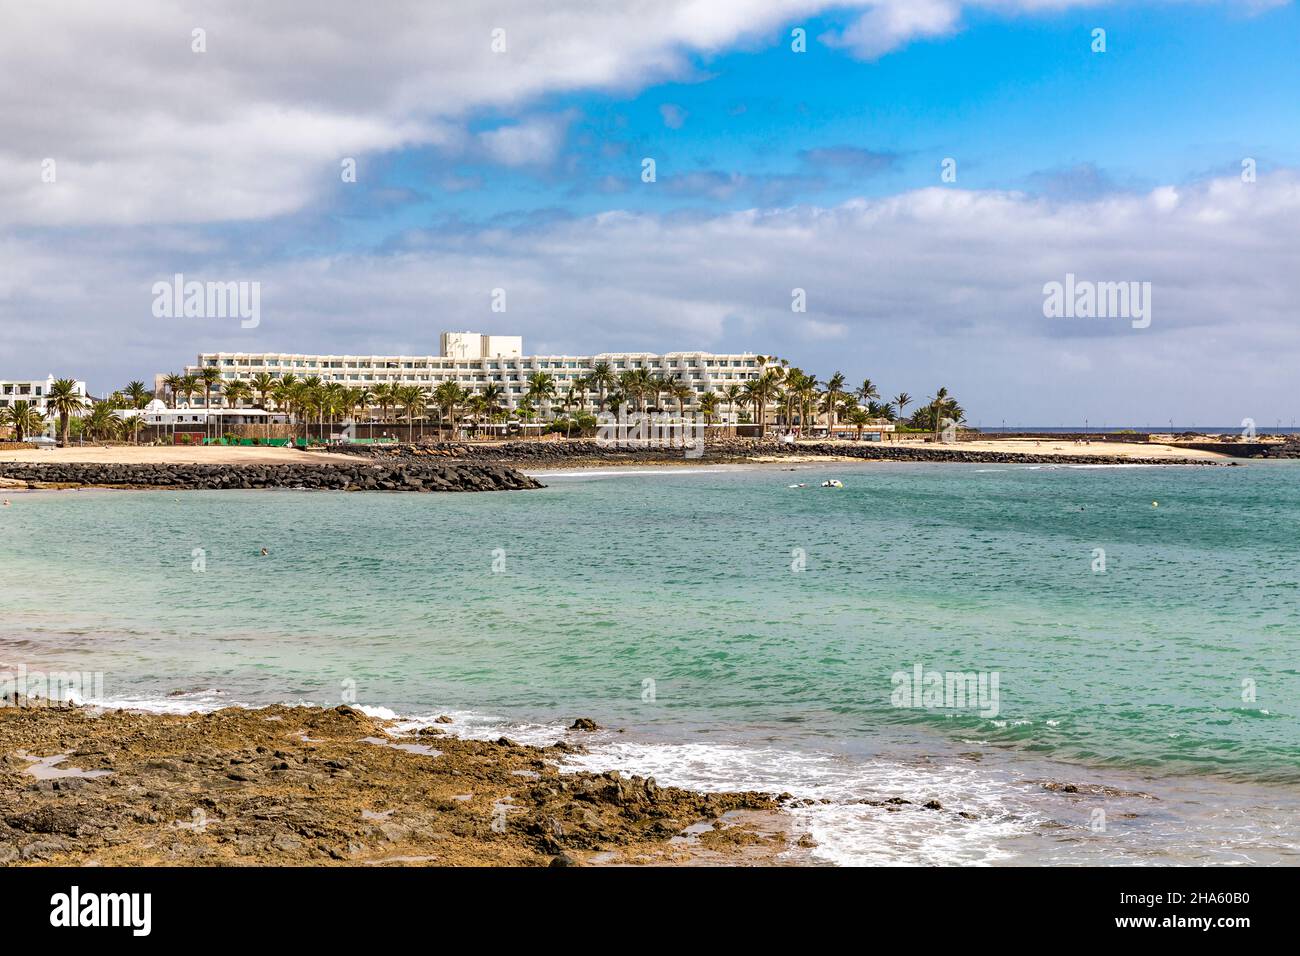 complesso alberghiero sulla spiaggia, playa de las cucharas, costa teguise, lanzarote, canarie, isole canarie, spagna Foto Stock